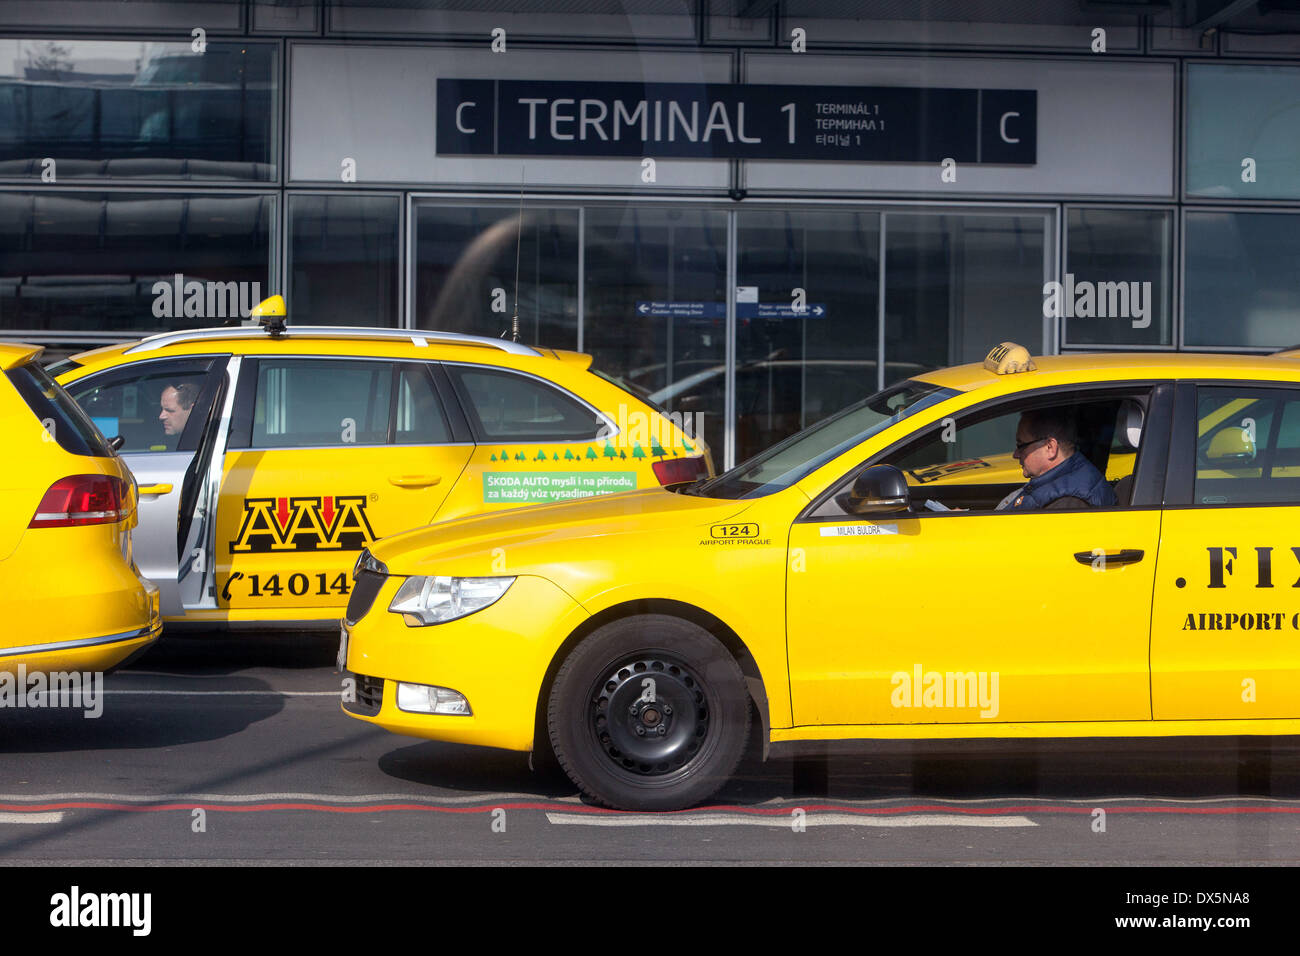 Airport taxi cab -Fotos und -Bildmaterial in hoher Auflösung